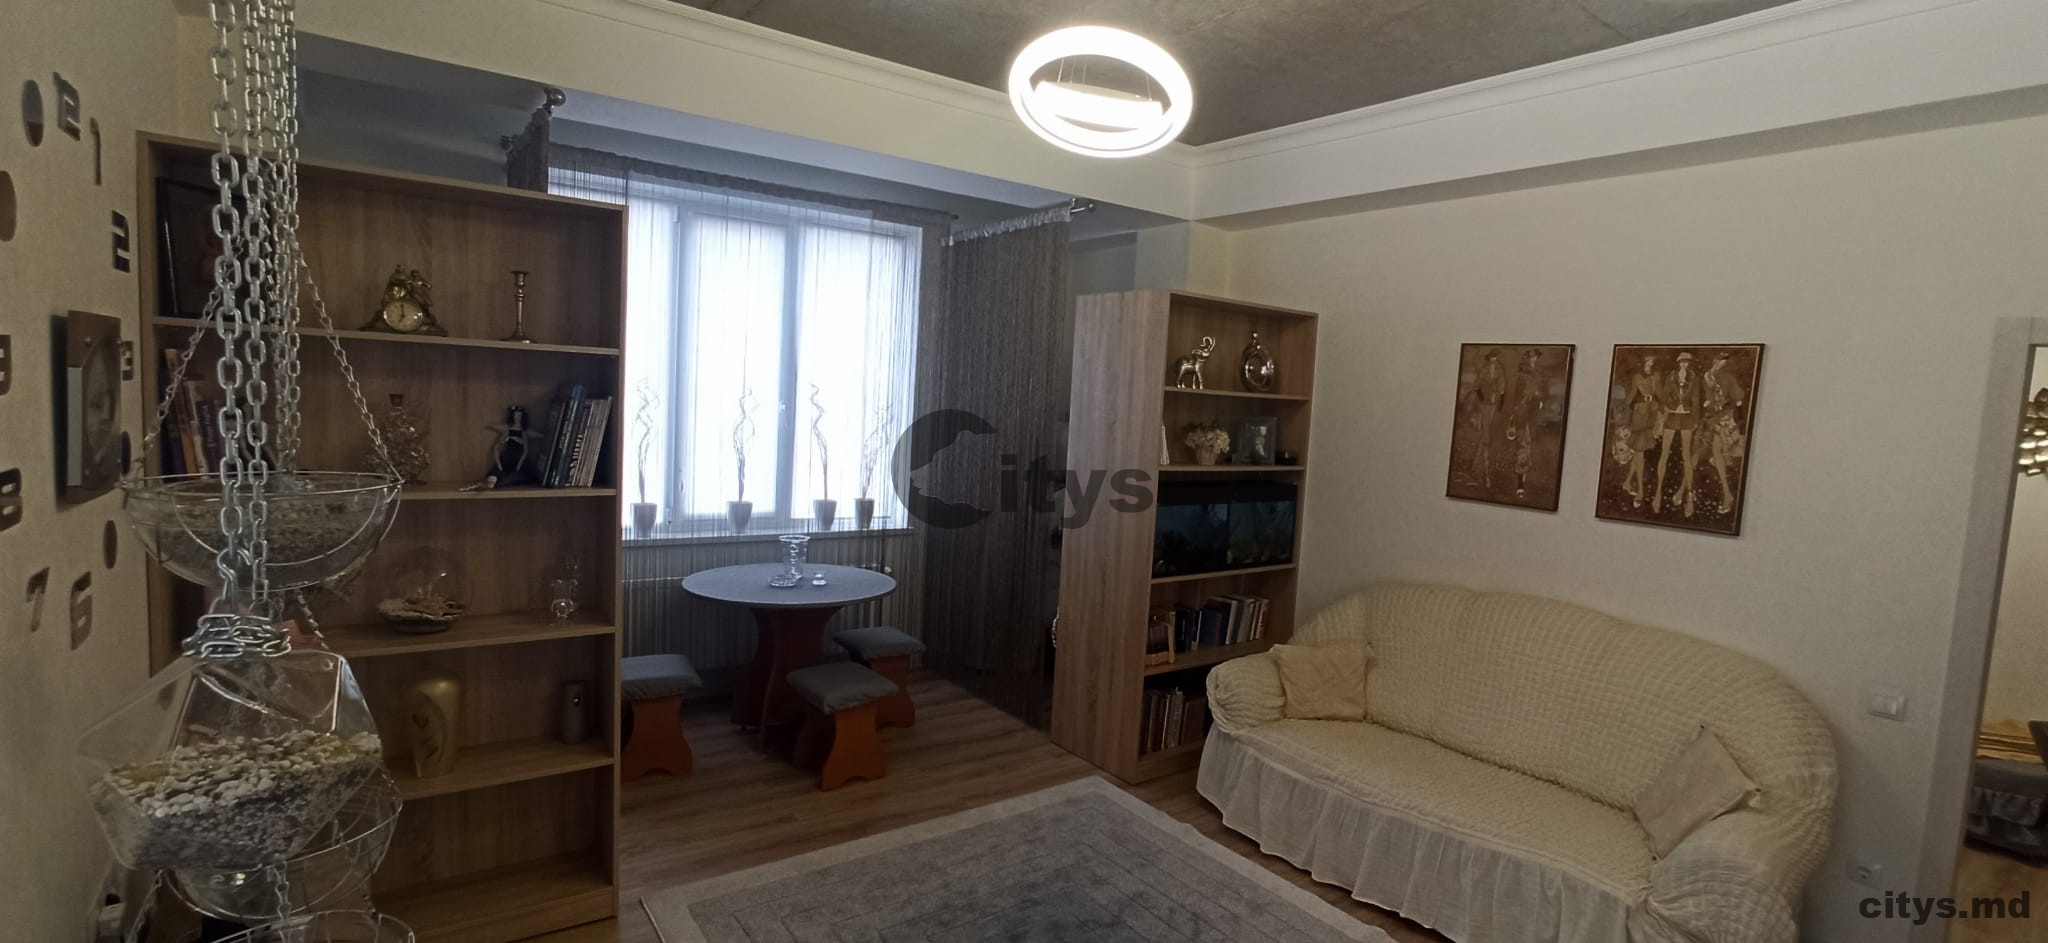 apartament cu 1 cameră, 47m², Moldova, Chișinău, strada Ciocârliei photo 8